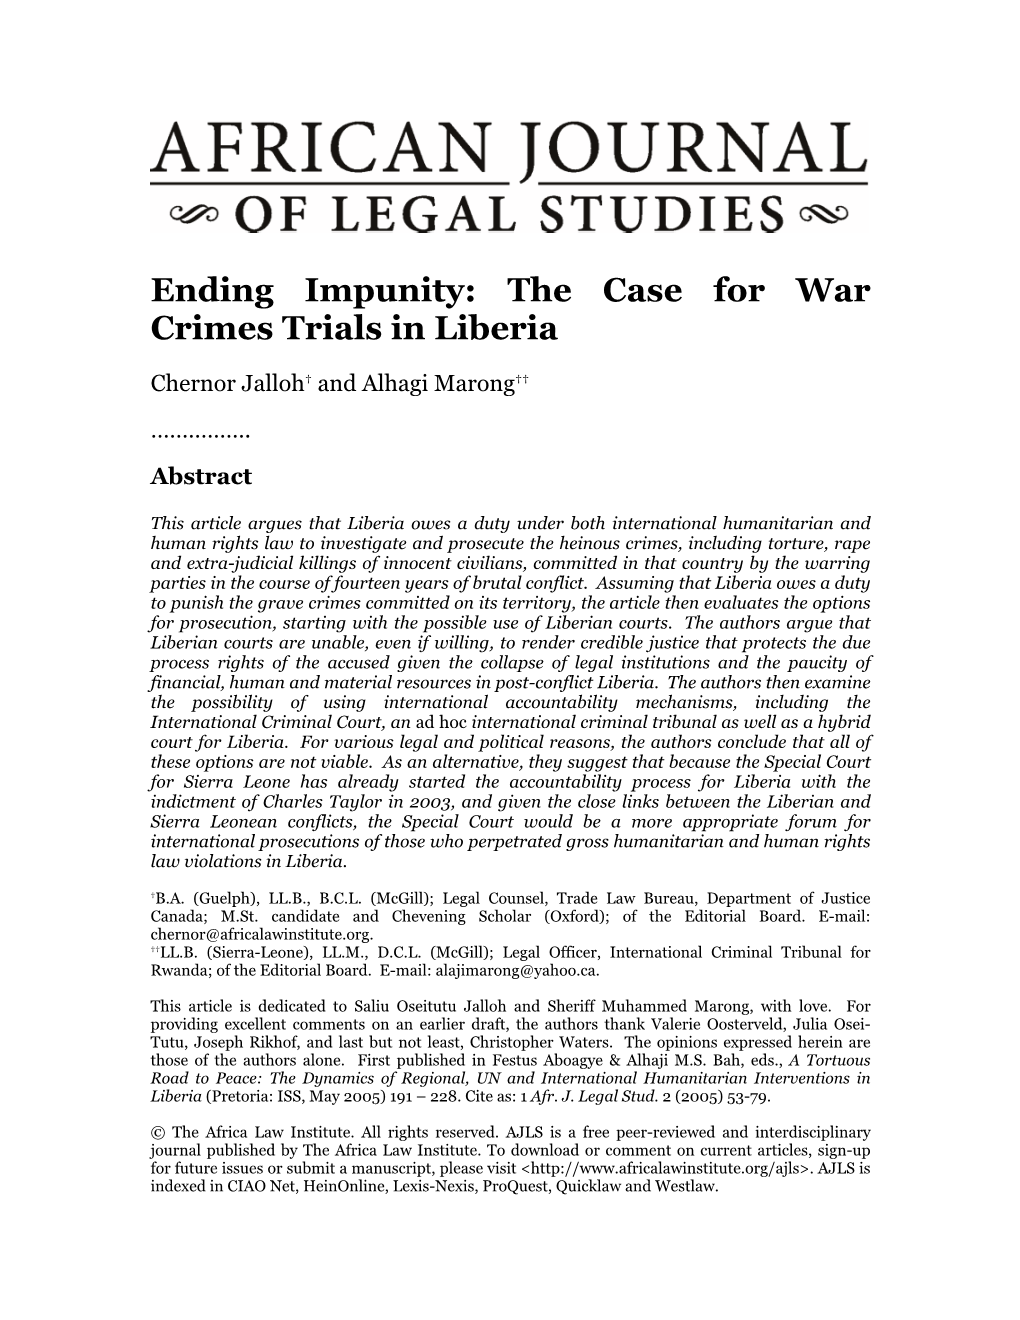 The Case for War Crimes Trials in Liberia